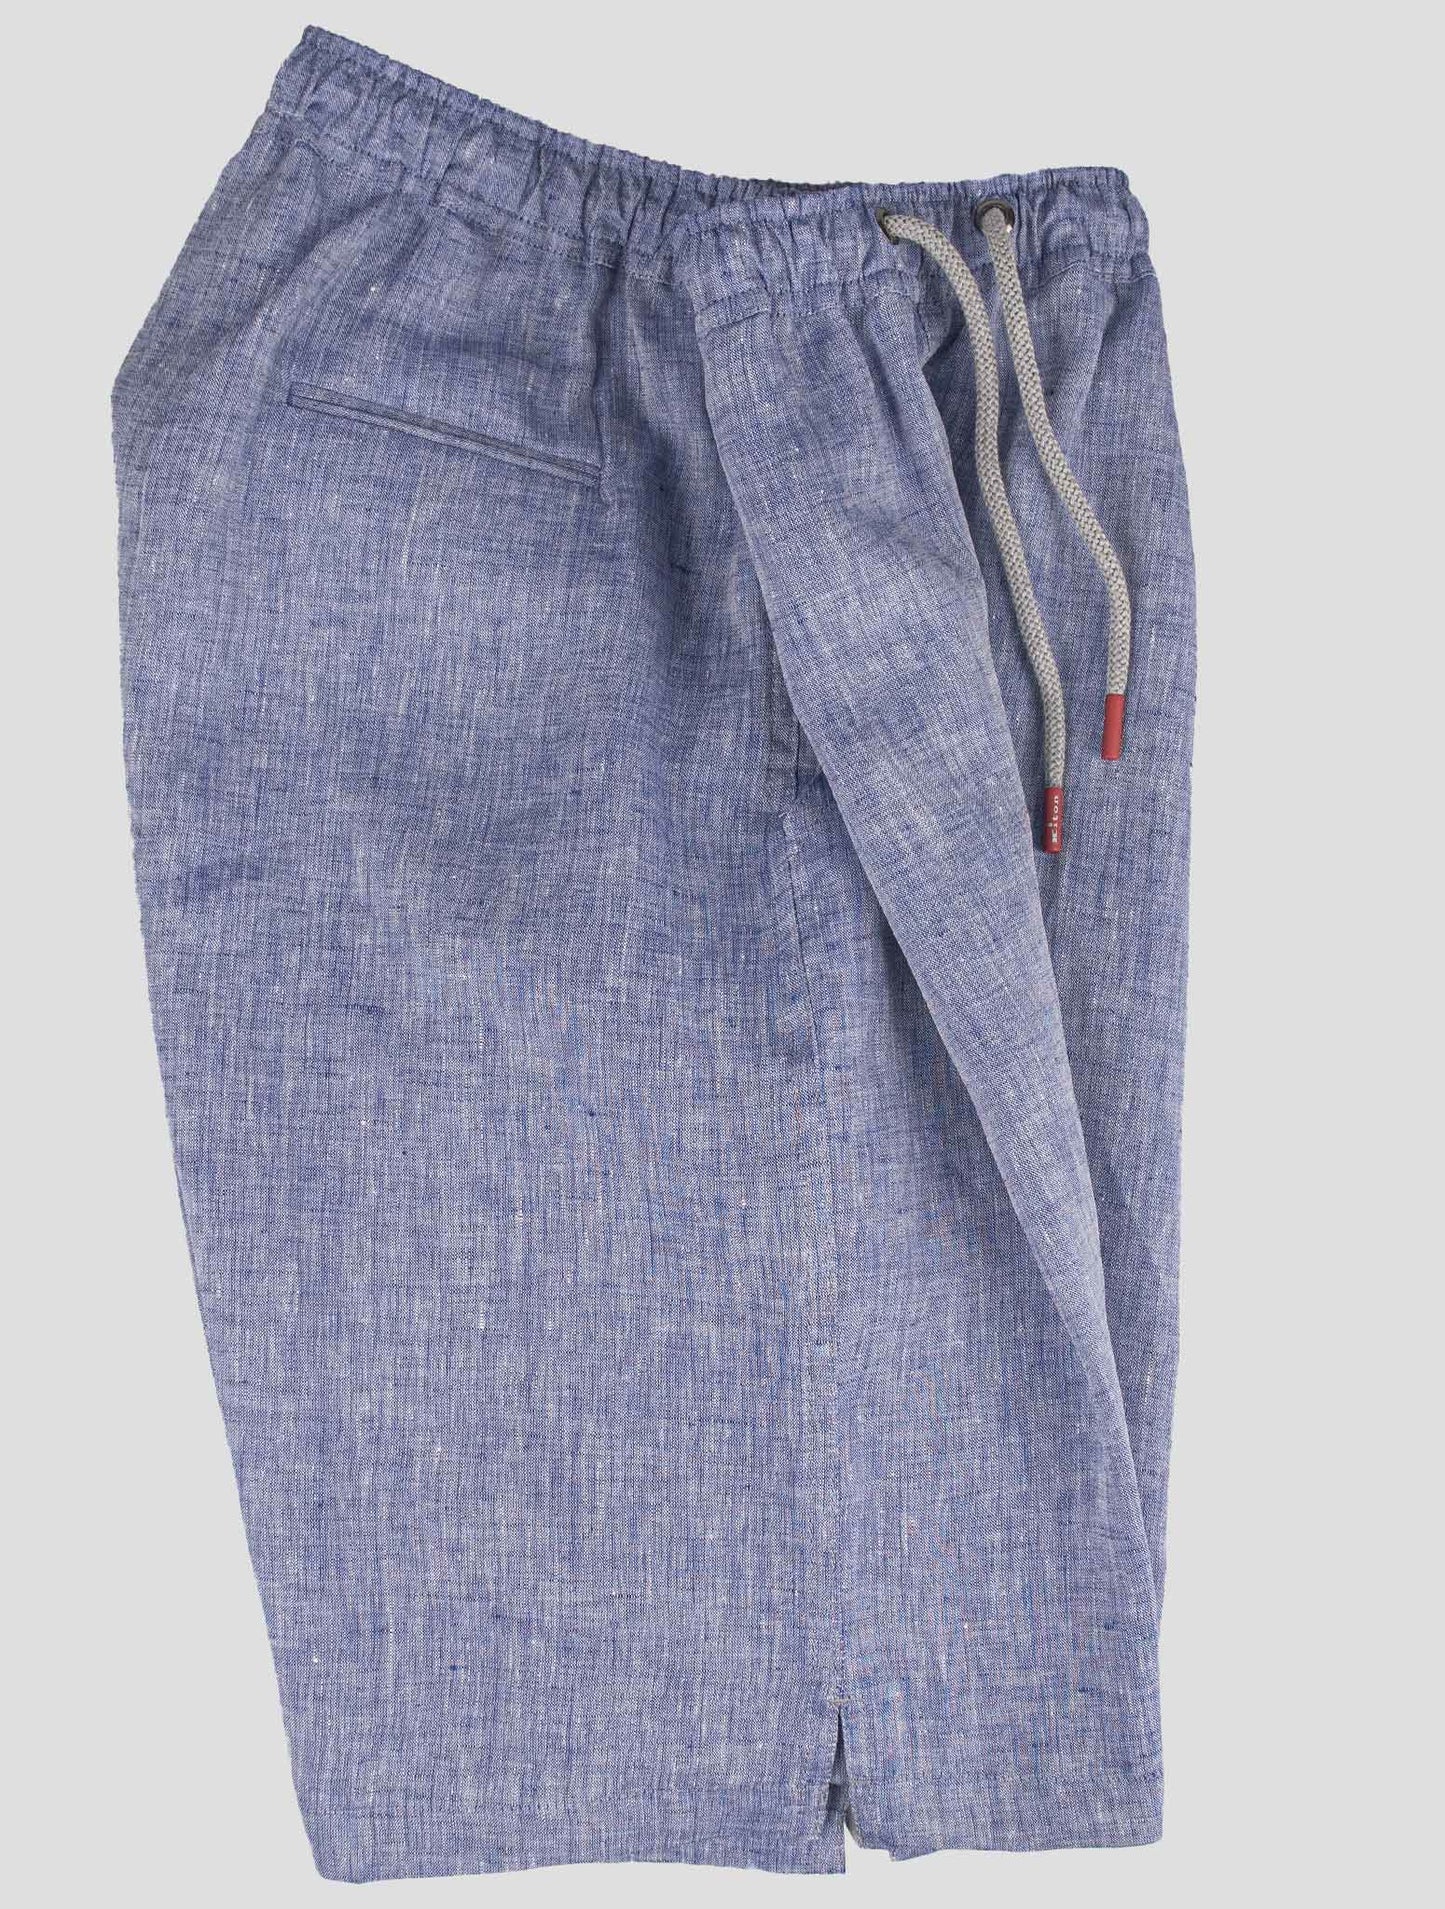 Kiton fialové šortky kalhoty